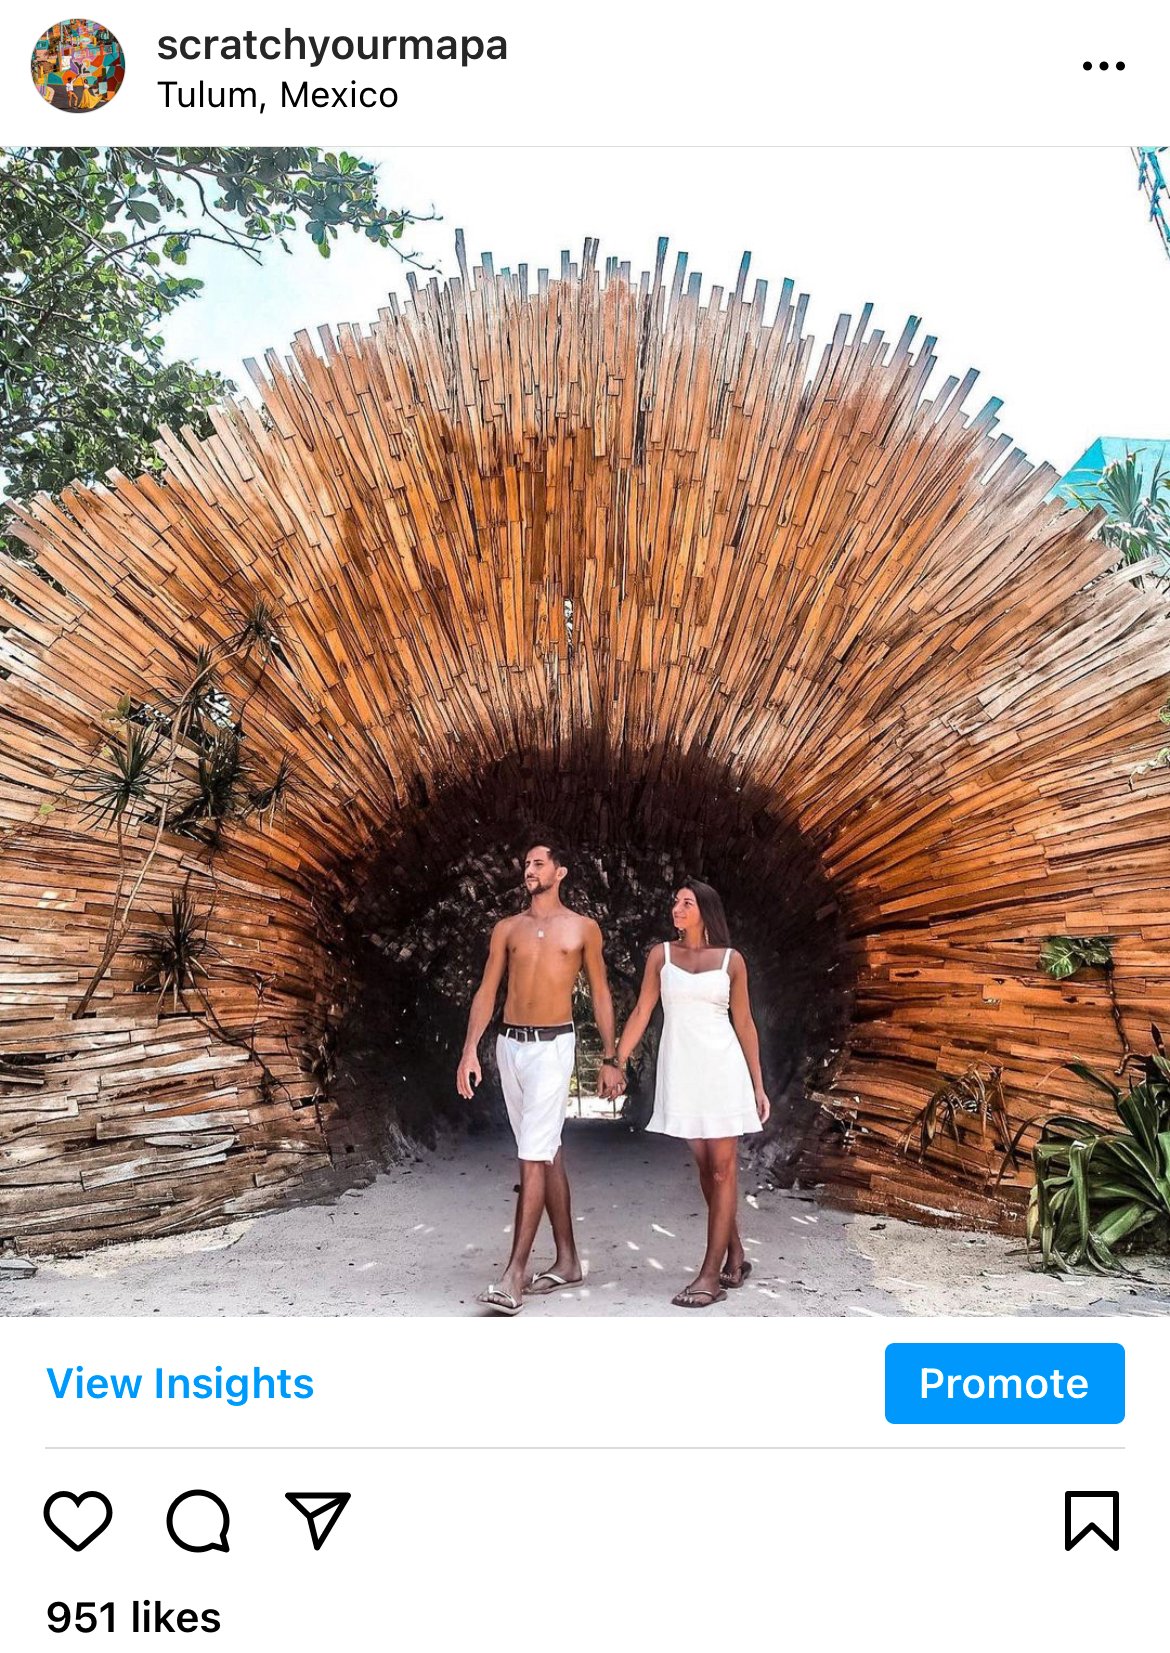 Tulium Hote Zone, Instagrammable spots in Tulum